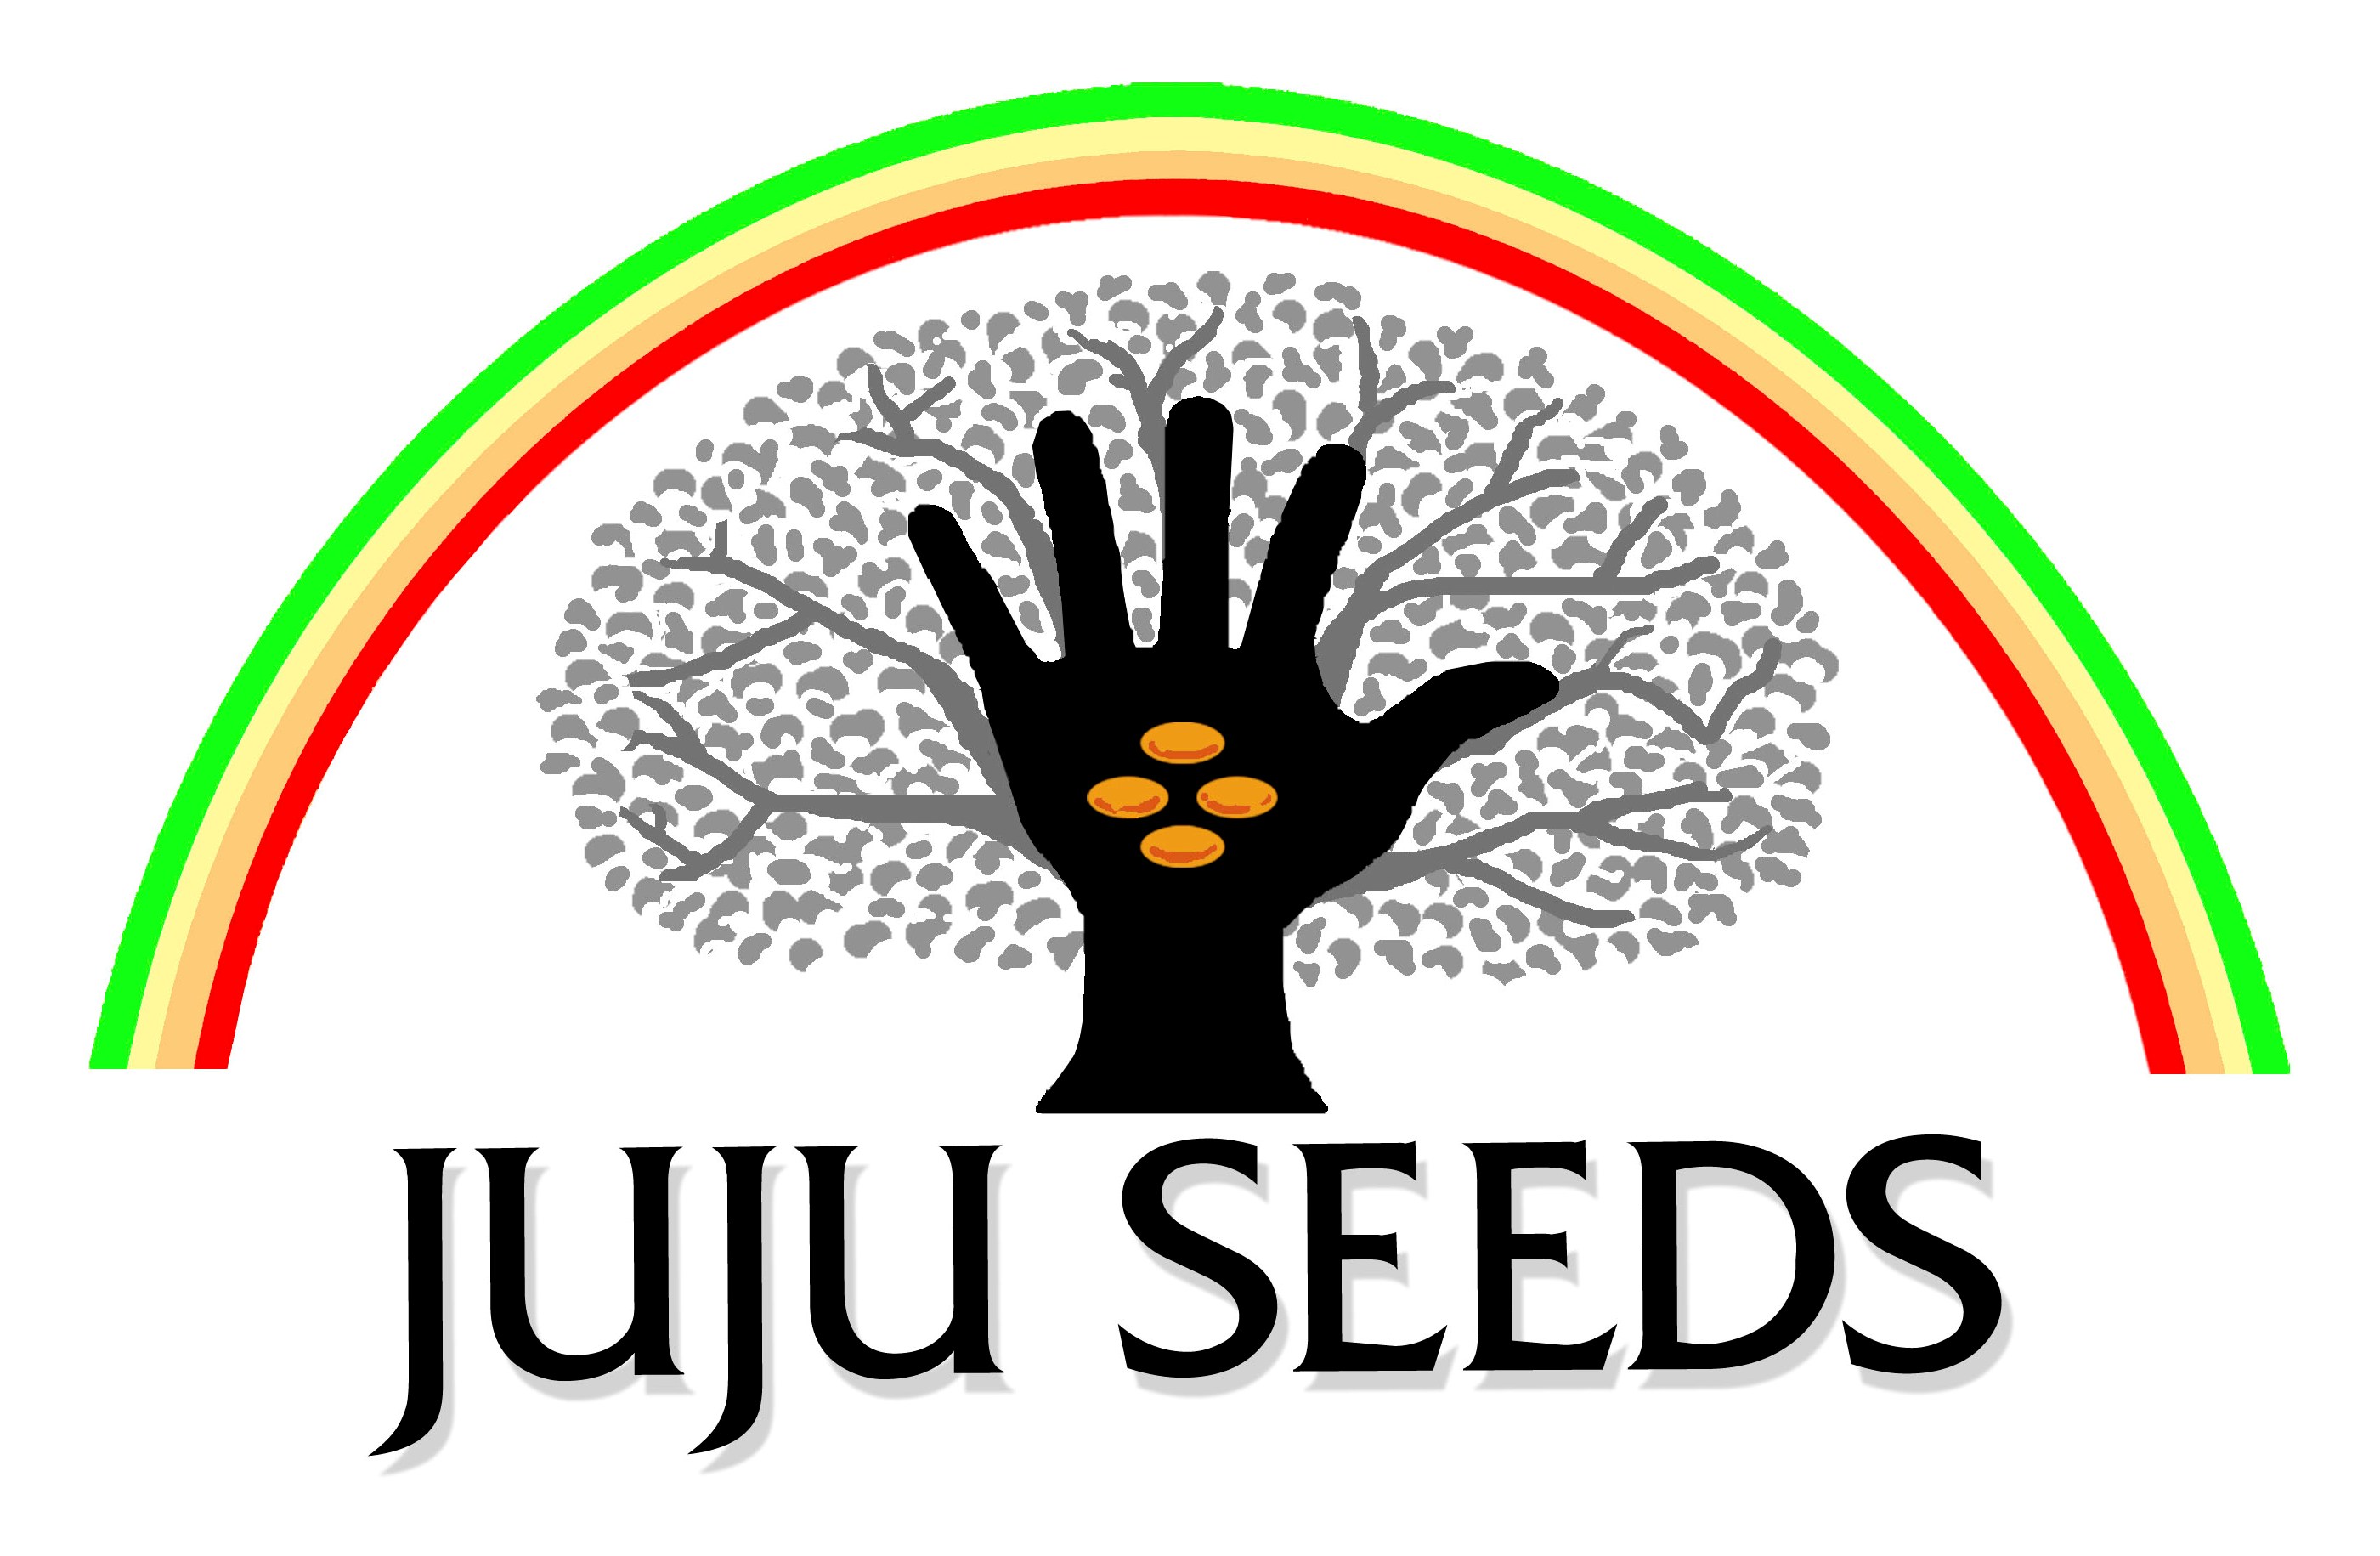 Juju Seeds | planting ideas of empowerment ? creating possibilities